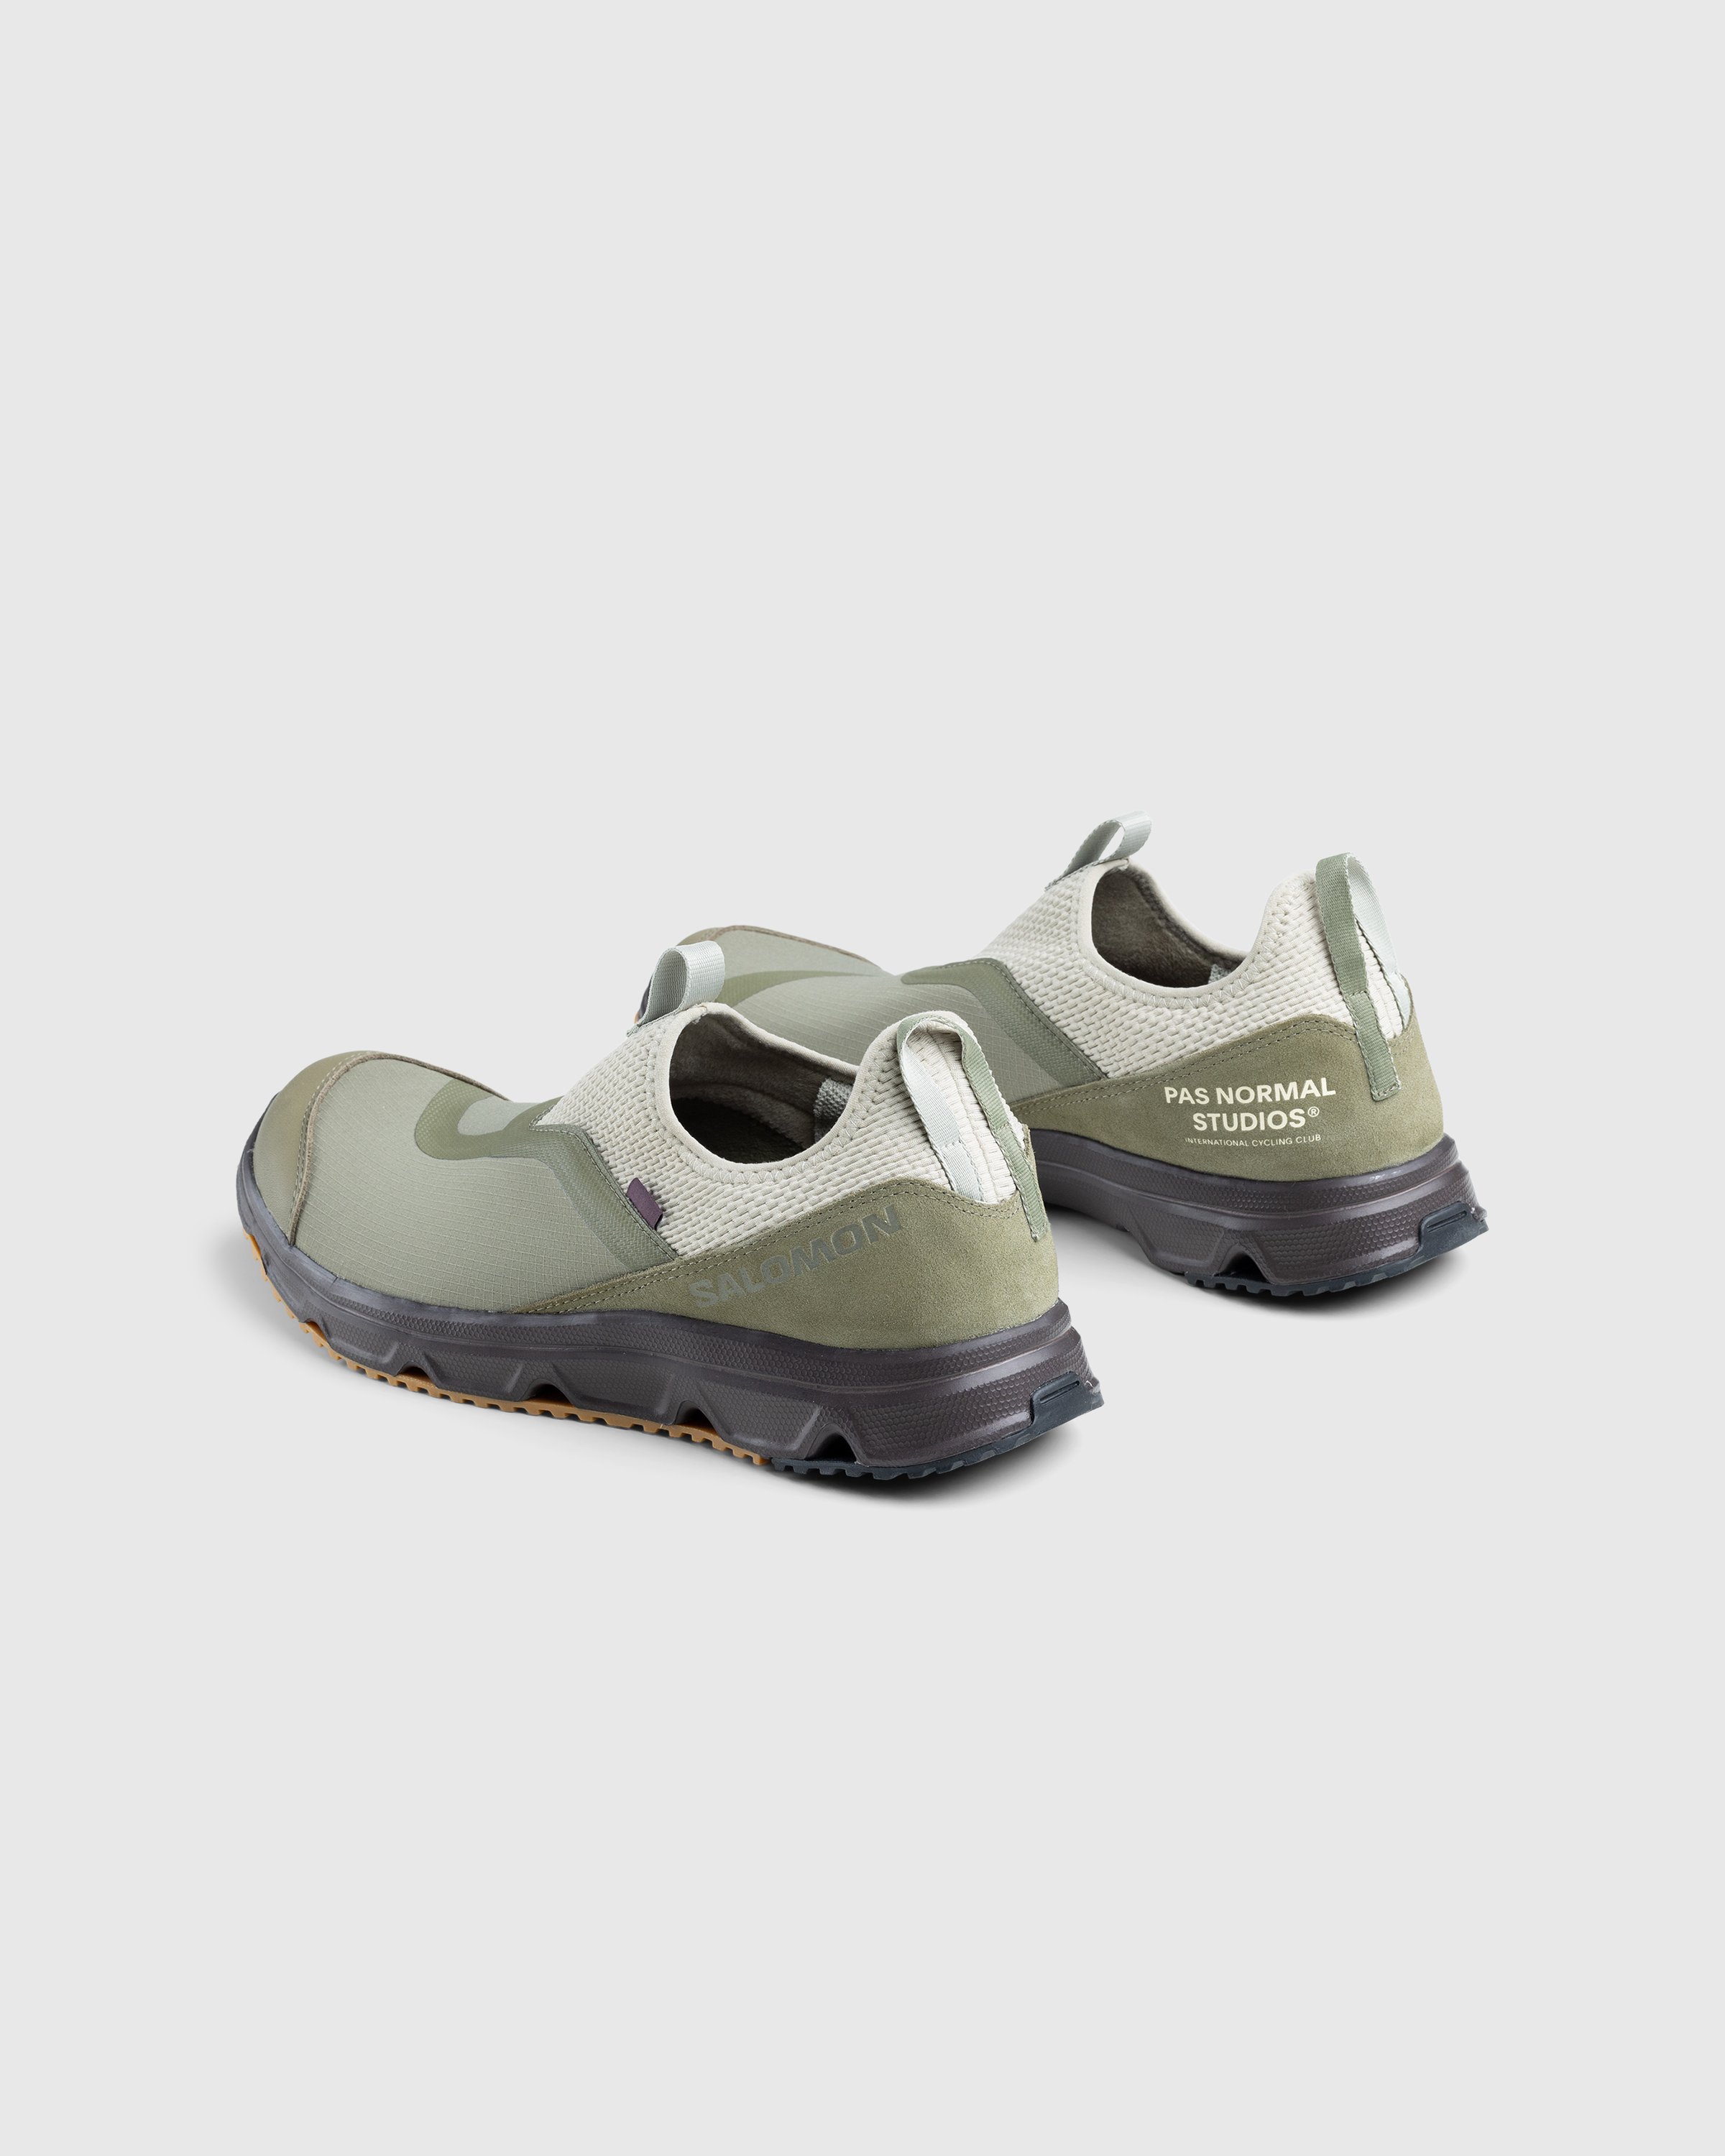 Salomon x PAS NORMAL STUDIOS - RX Snug Moss Grey/Deep Lichen Green/Black Coffee - Footwear - Green - Image 4